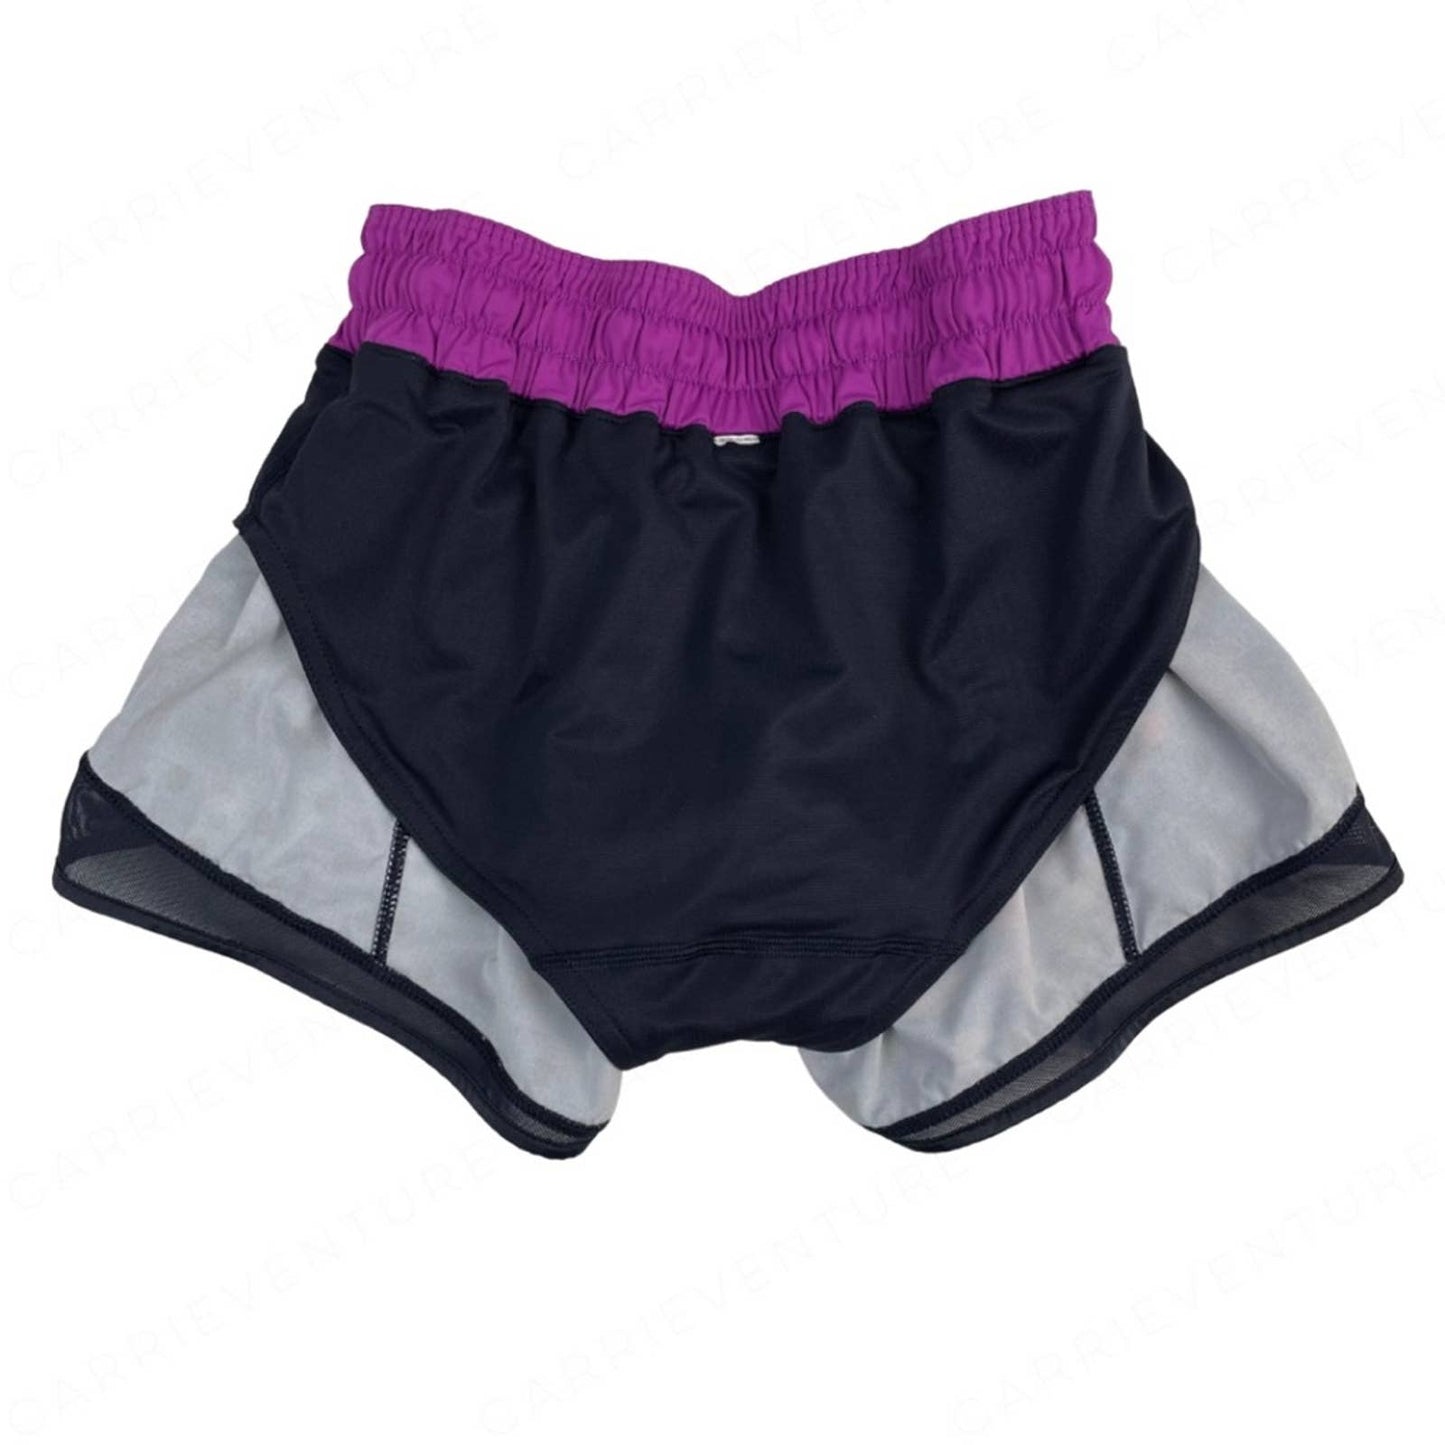 Lululemon Super Squad Short Windy Blooms Print Running Active Athletic Shorts Size 4